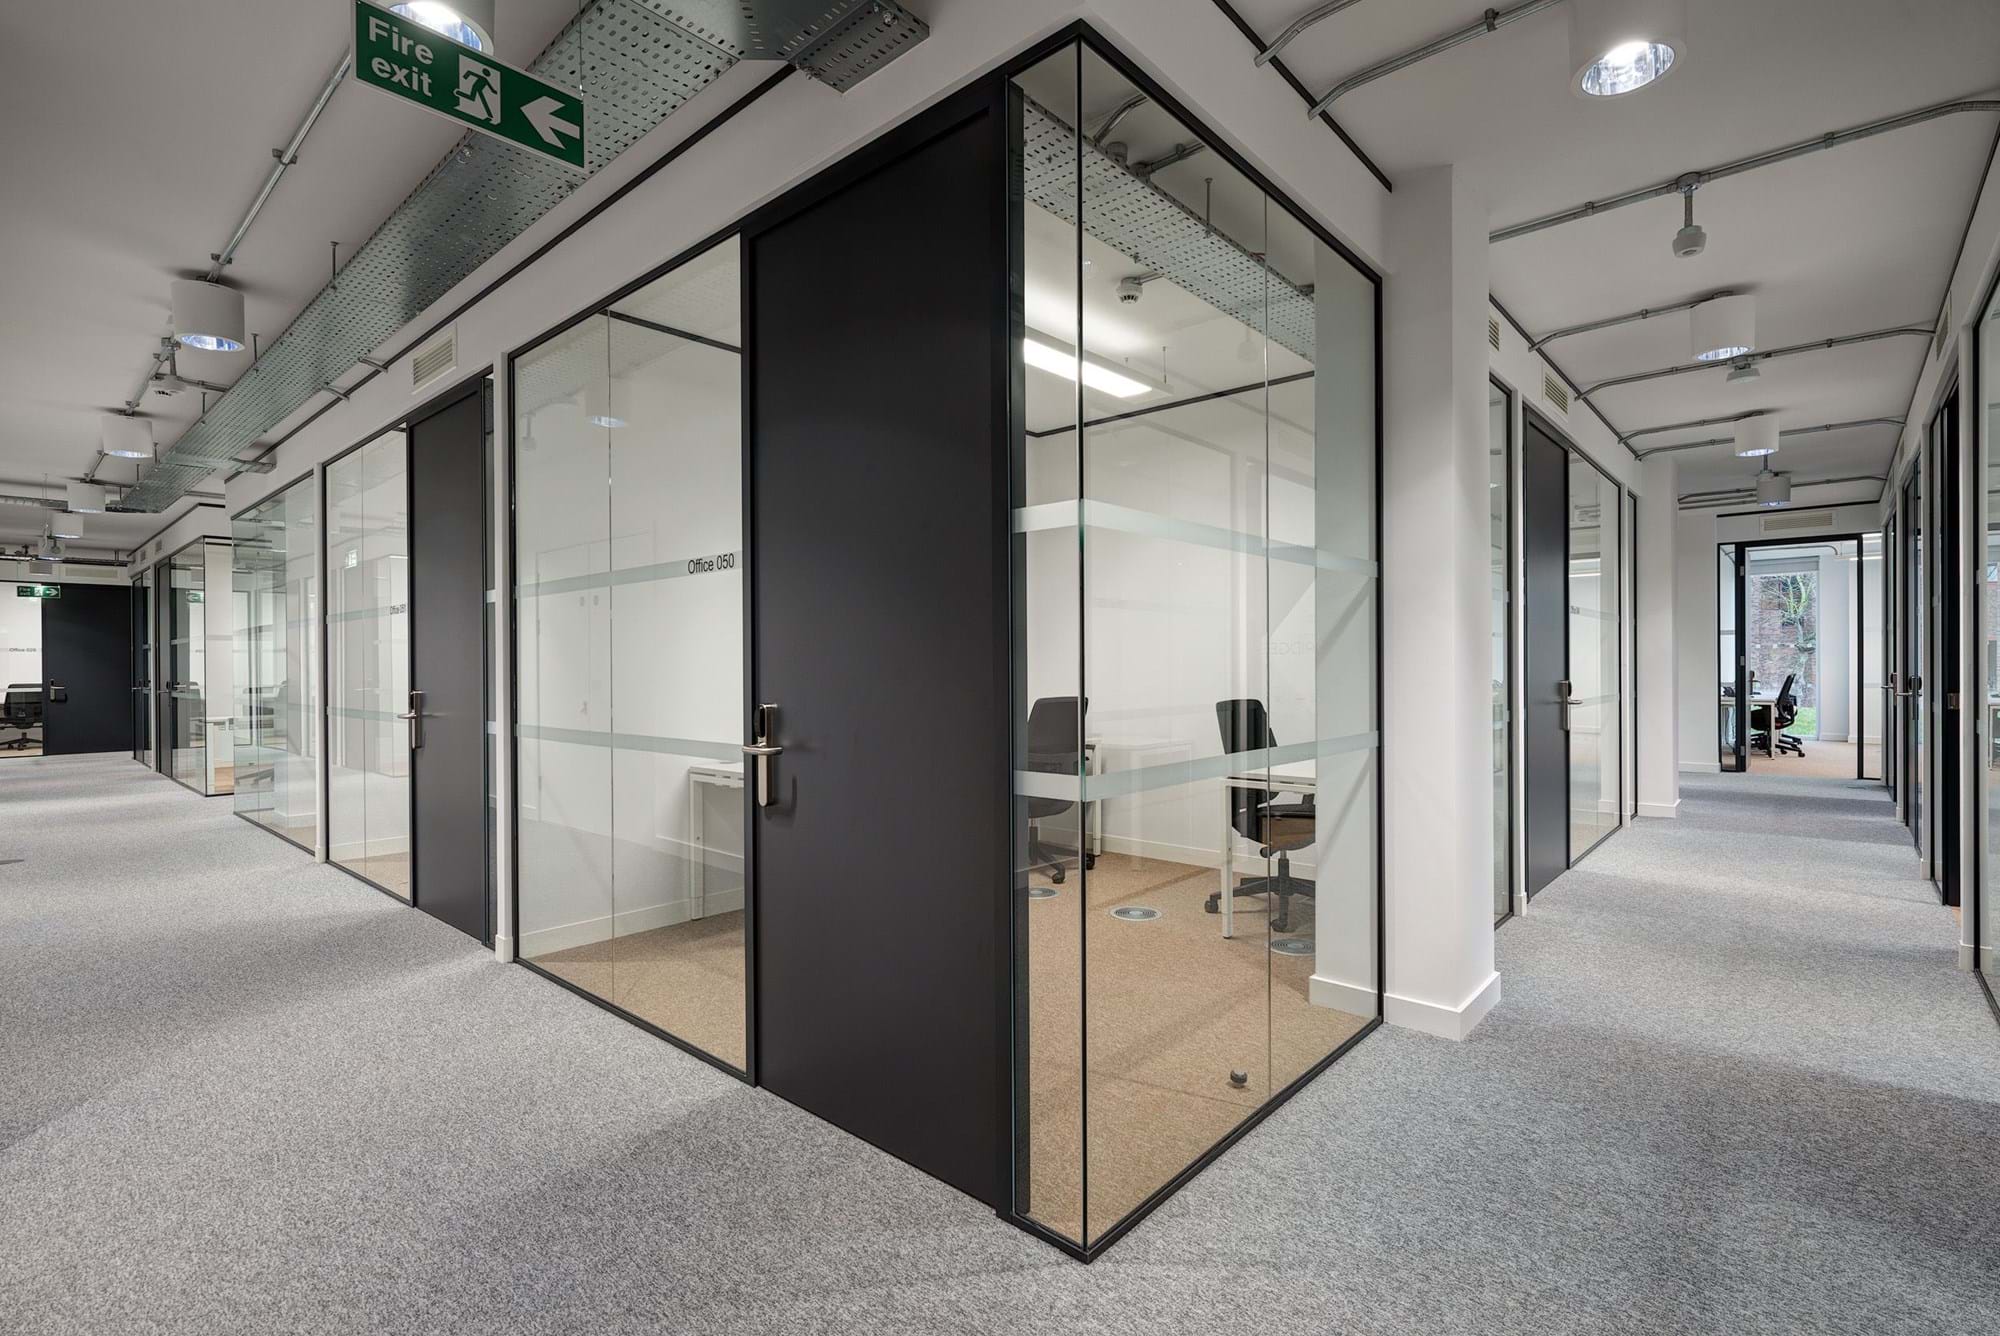 Modus Workspace office design, fit out and refurbishment - Spaces - Uxbridge - Spaces Uxbridge 15 highres sRGB.jpg